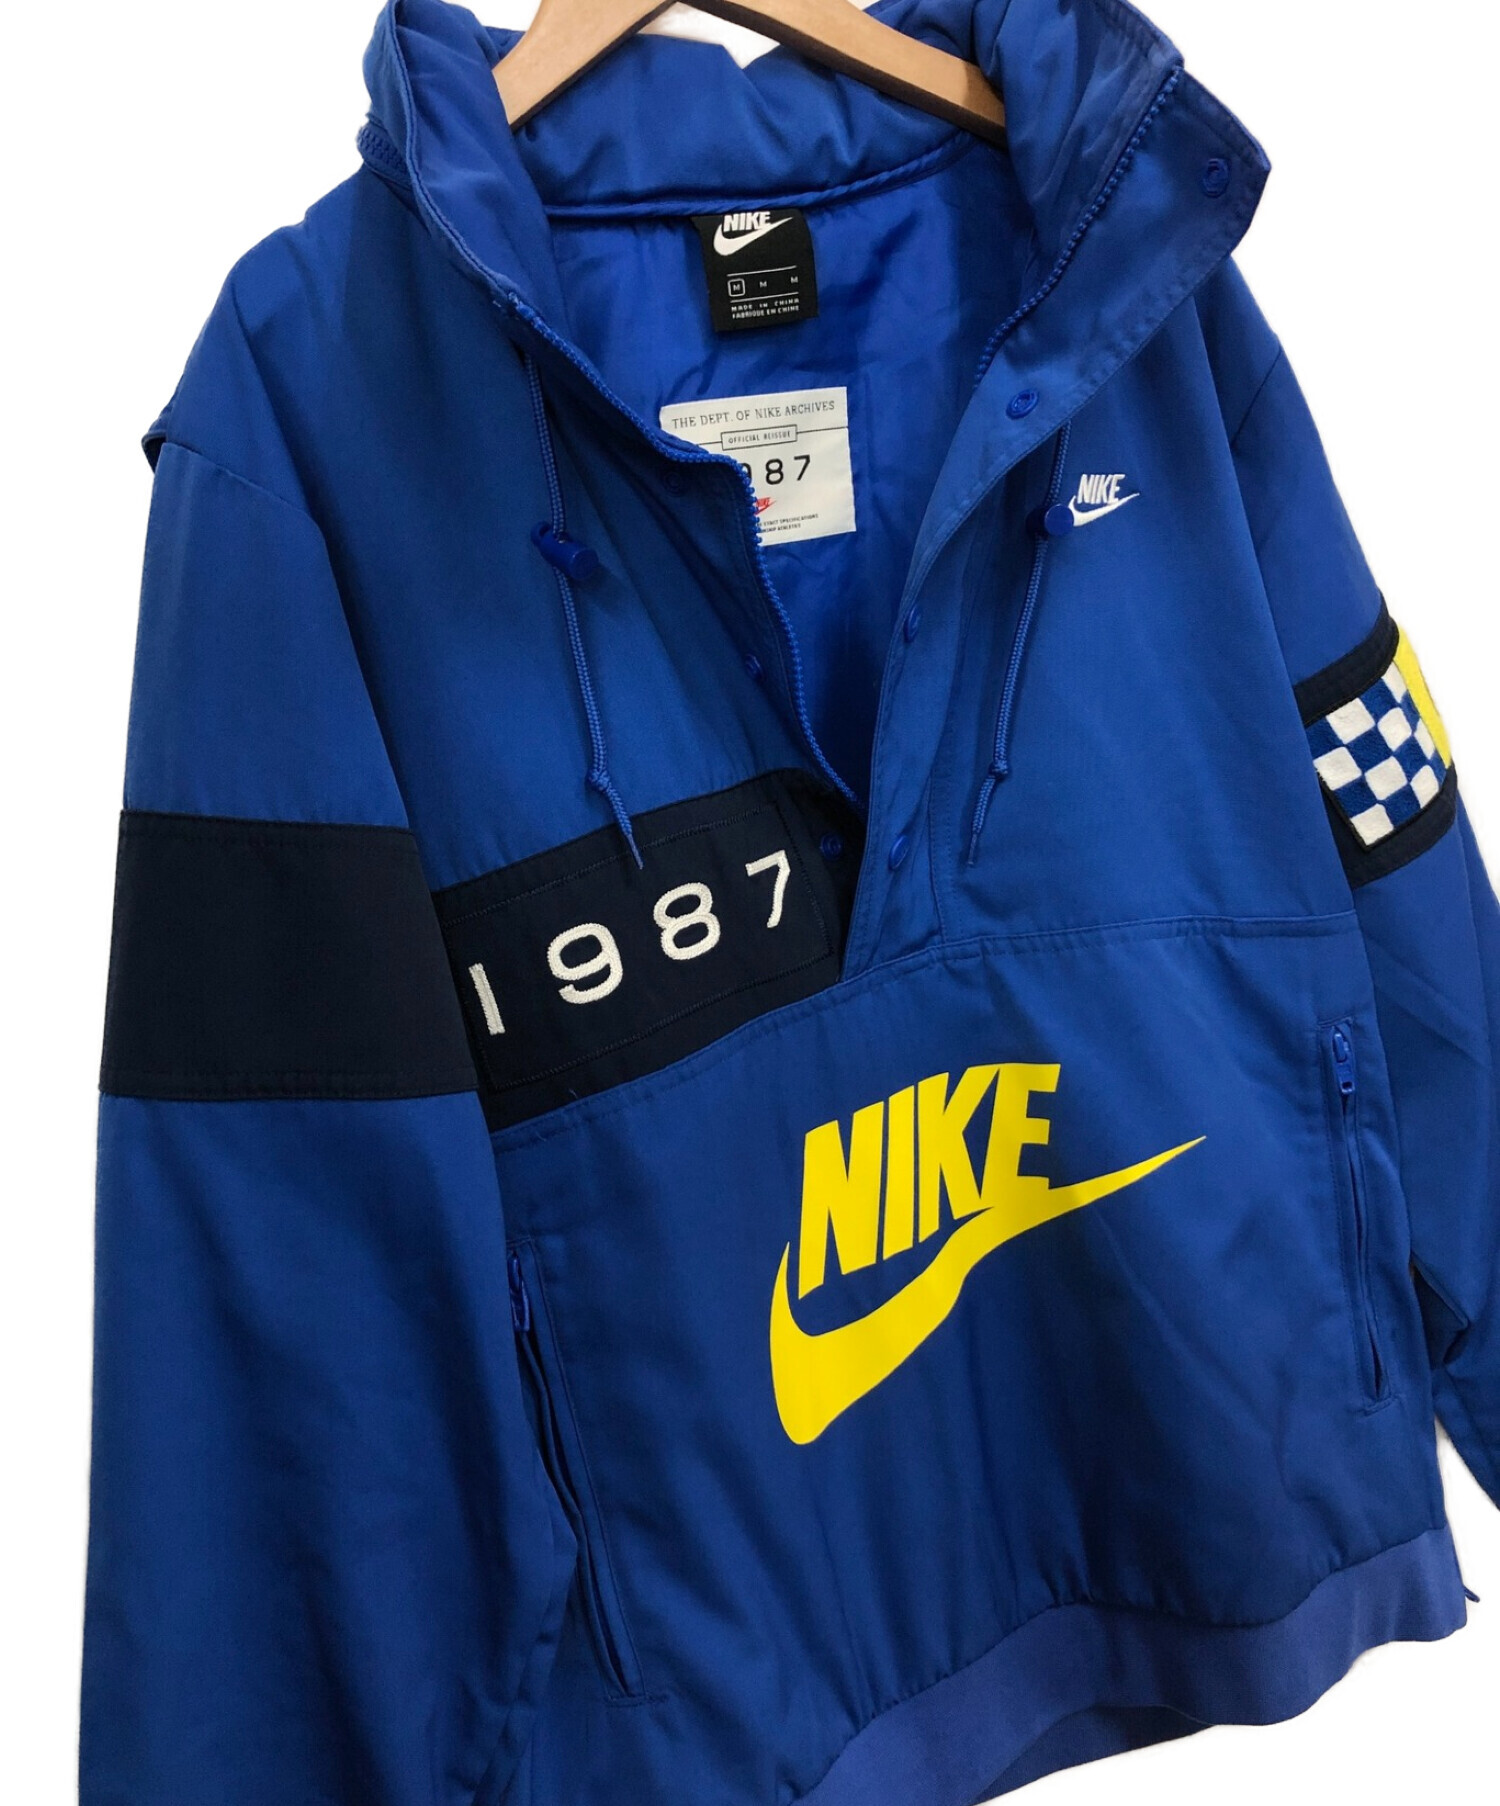 NIKE (ナイキ) ハーフジップジャケット ブルー サイズ:M